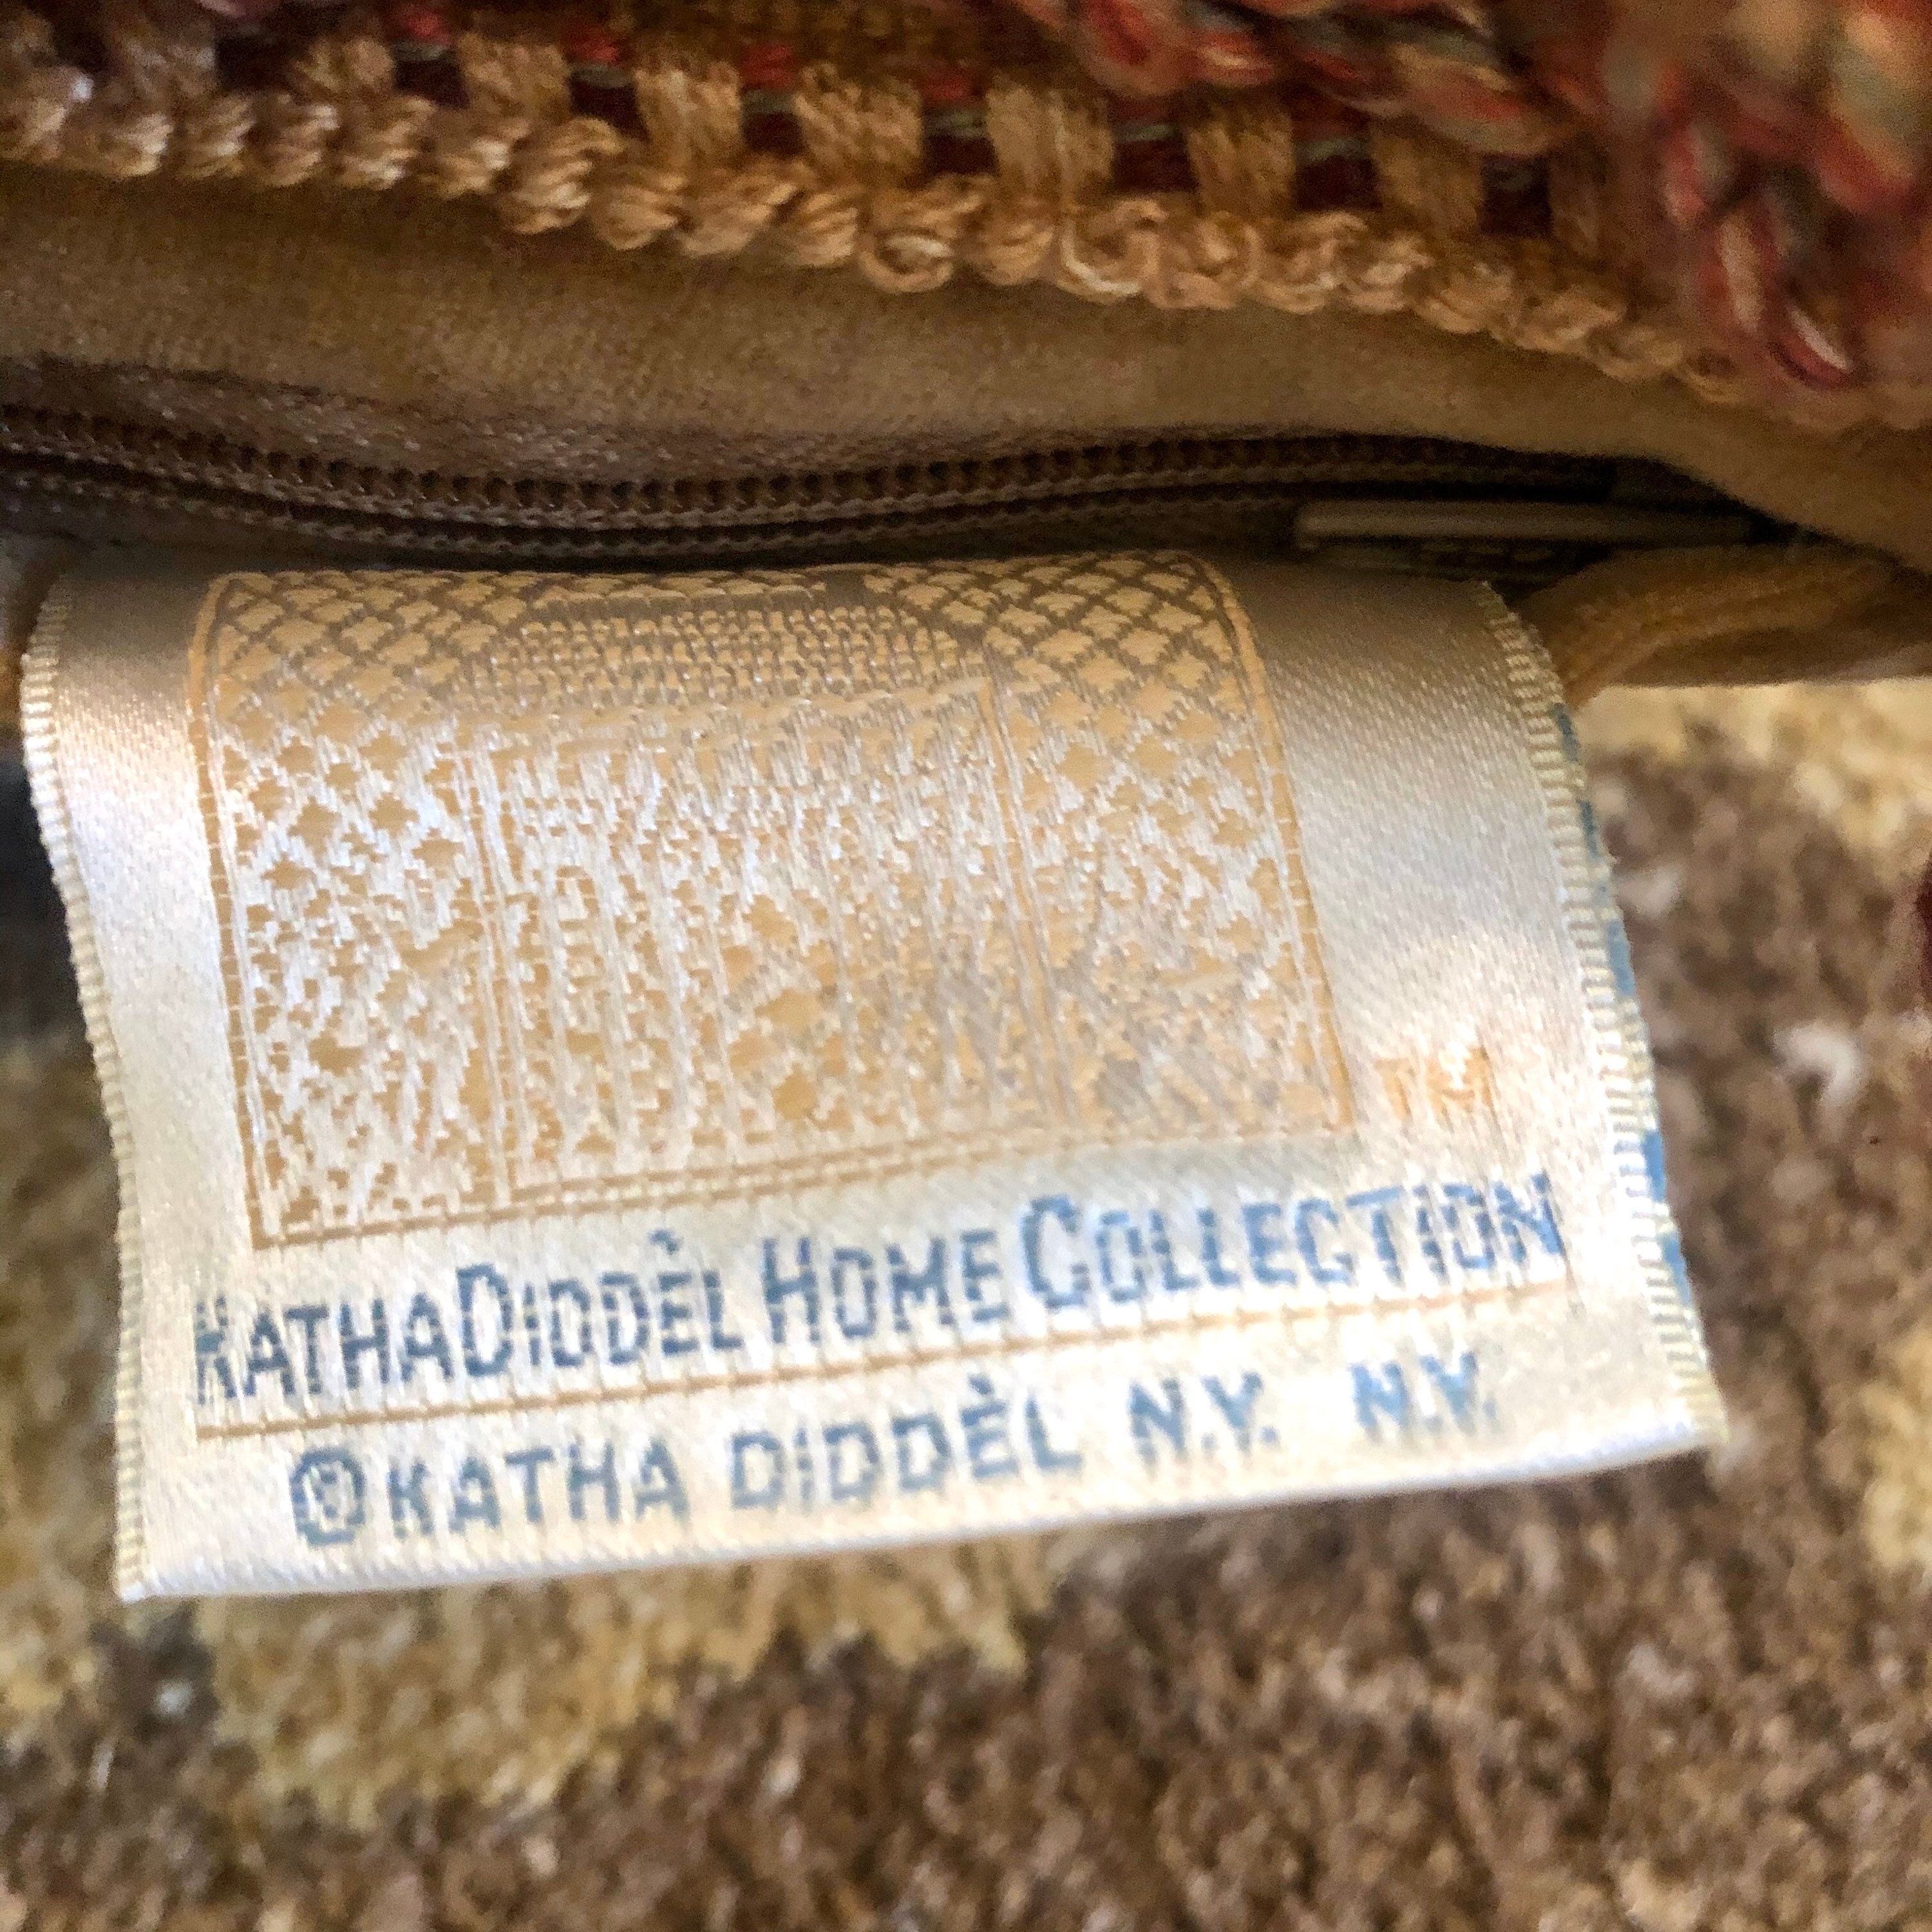 Katha Diddel Needlepoint Pillow Vintage Needlepoint Pillow | Etsy